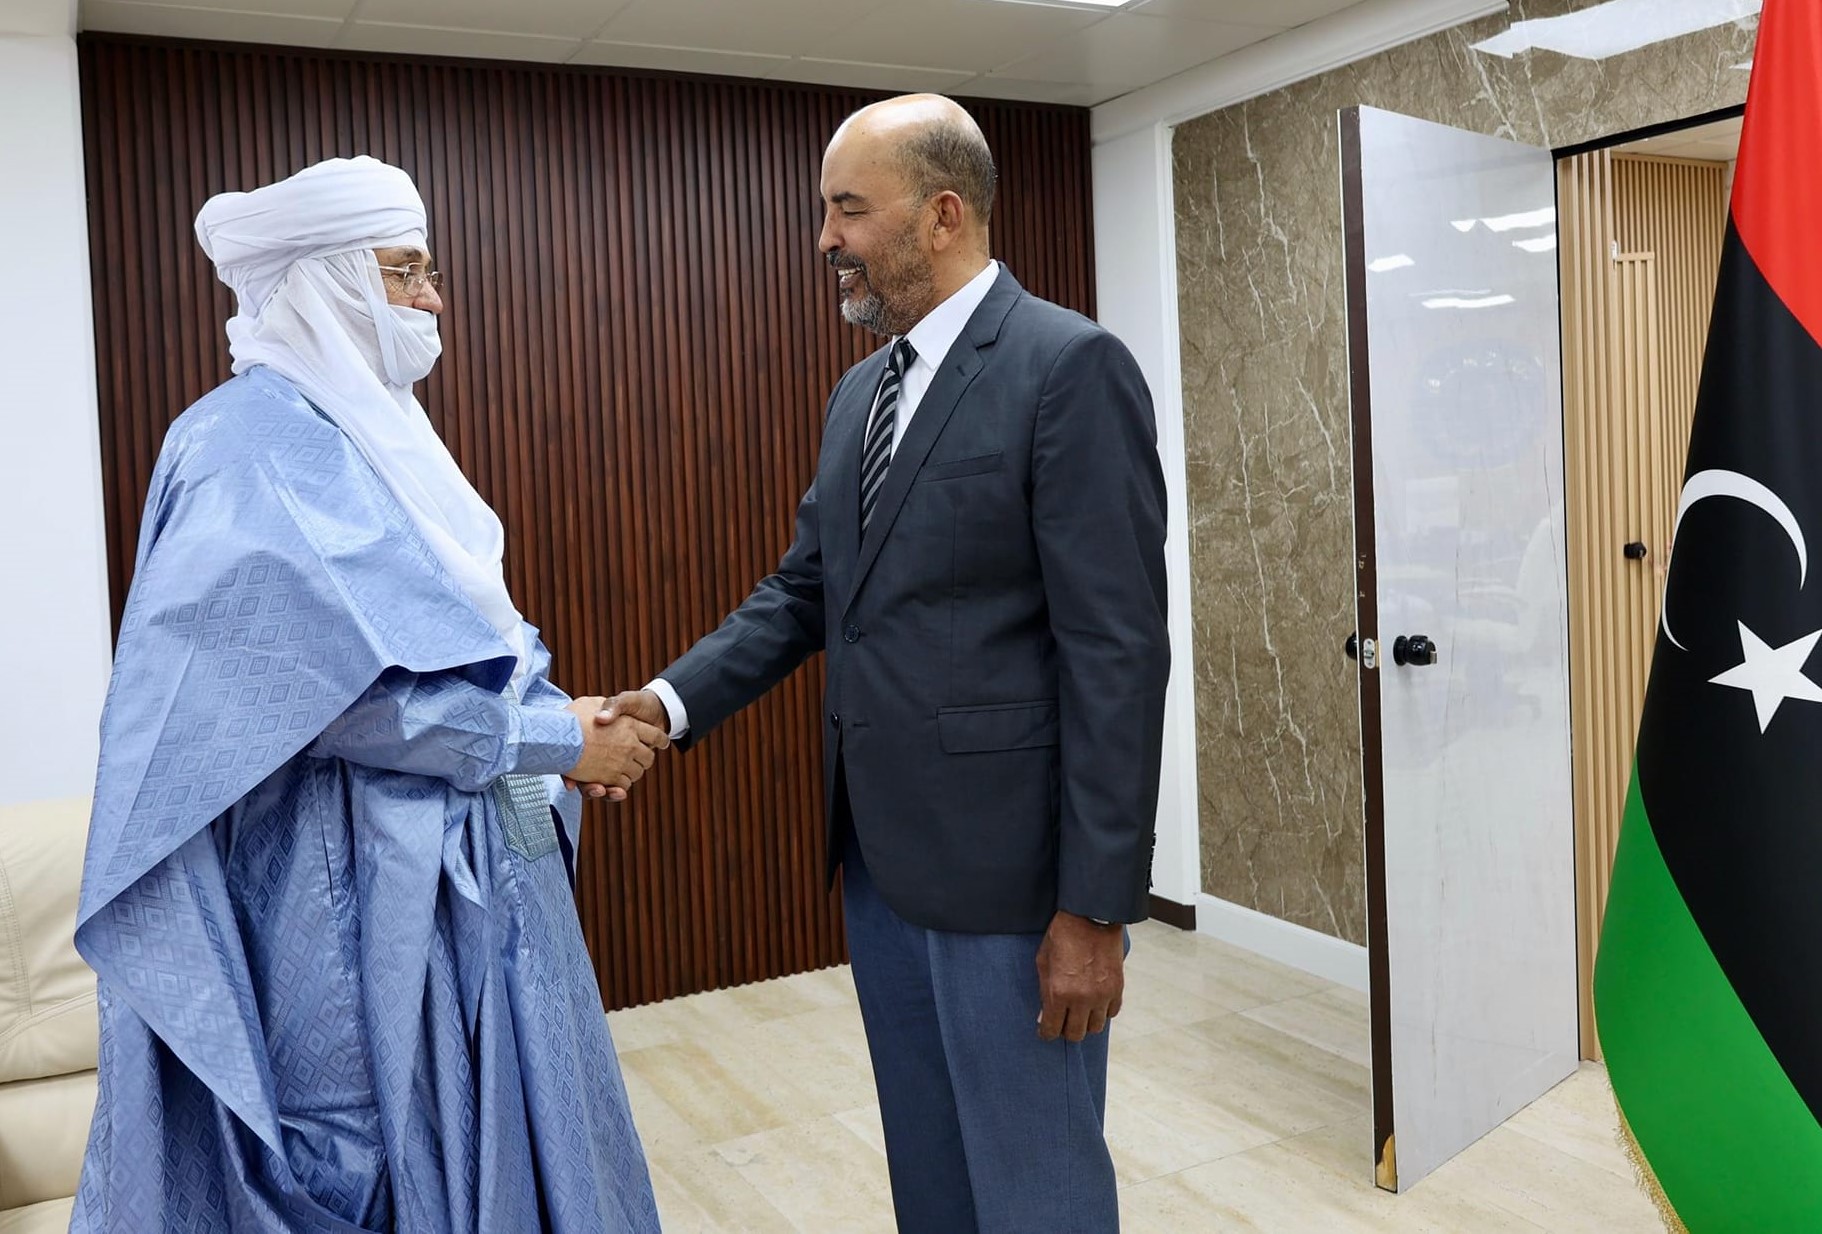 Al-Koni receives the Nigerien ambassador to Libya